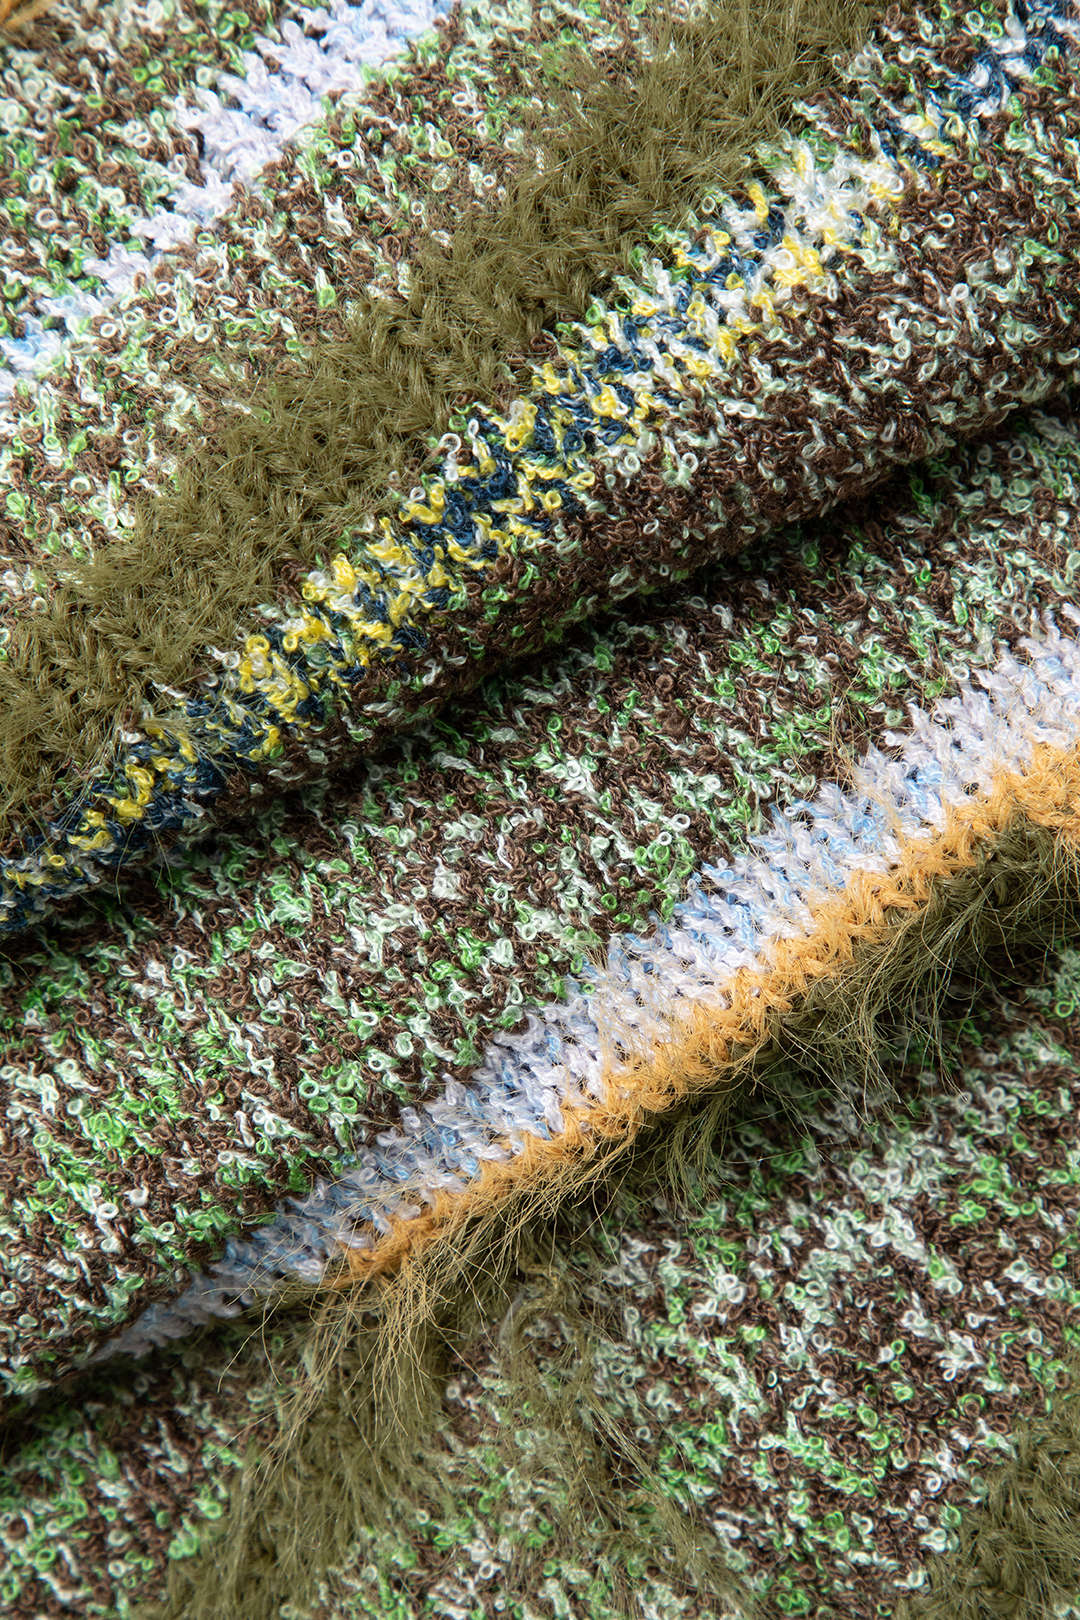 Feather Detail Stripe Cami Knit Midi Dress